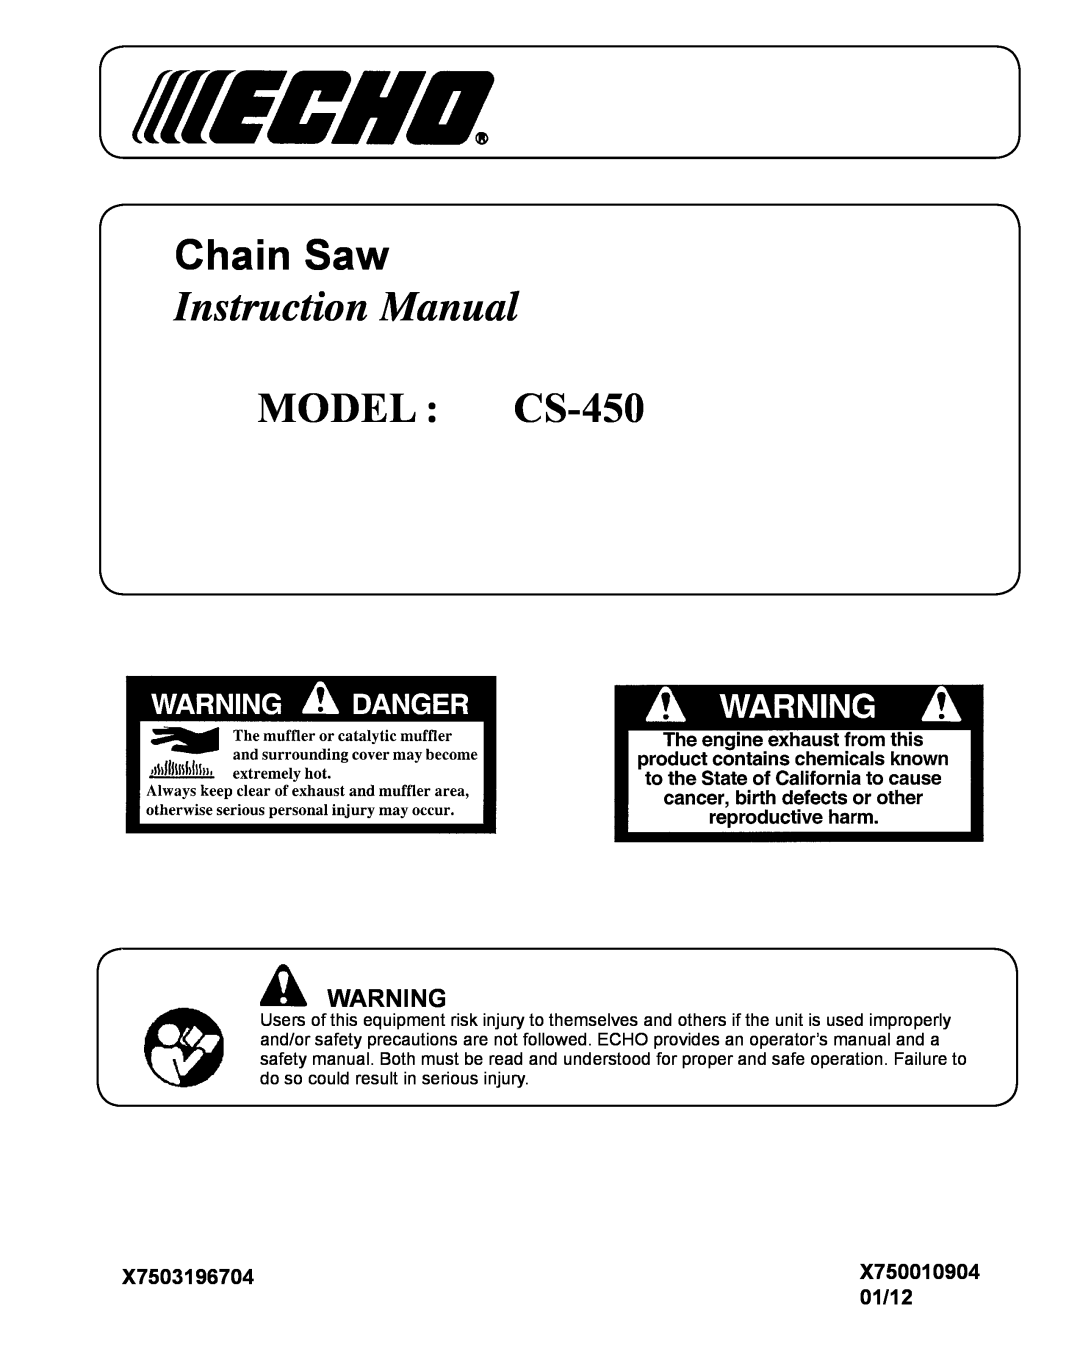 Echo X750010904 instruction manual X7503196704, 01/12, Chain Saw, MODEL CS-450 